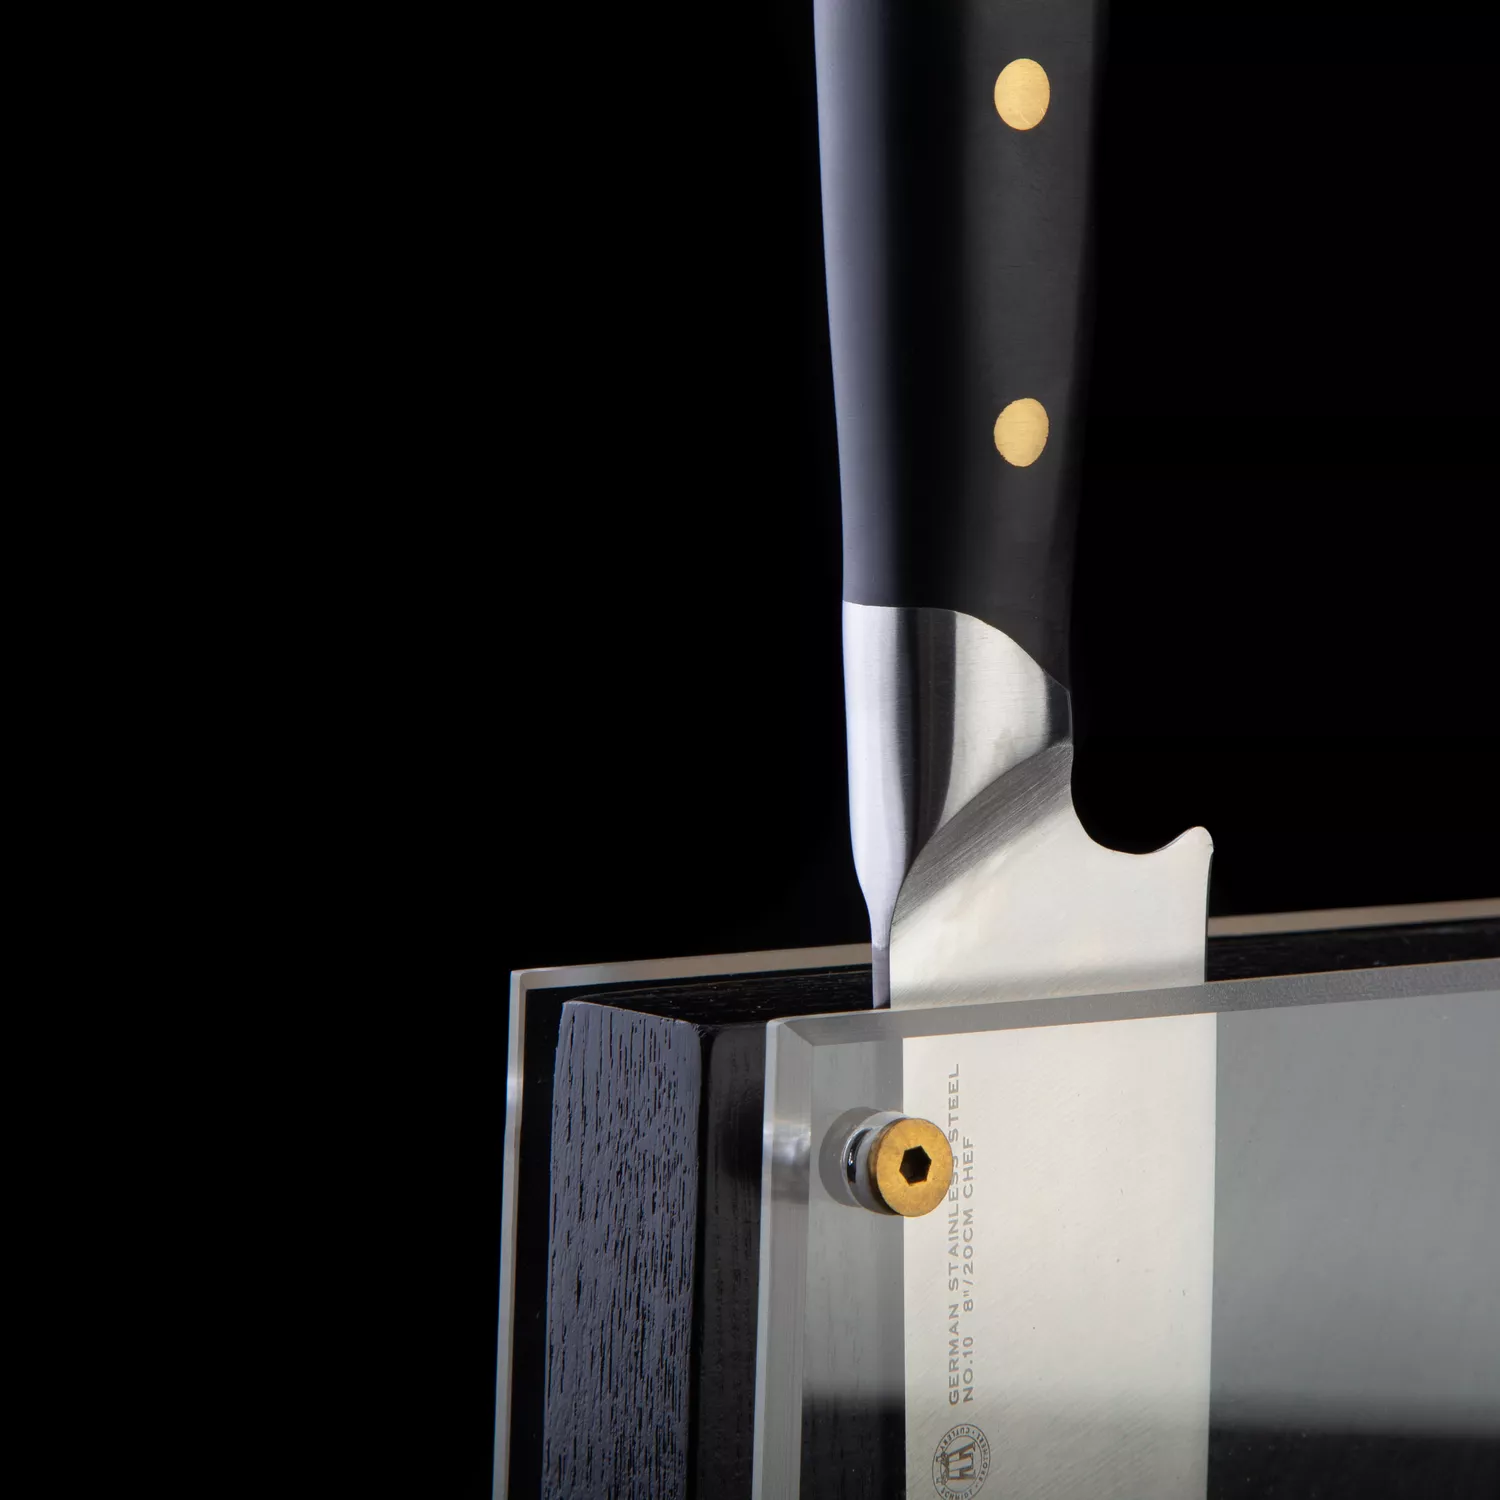 Schmidt Brothers Cutlery Black & Brass, 15-Piece Knife Block Set